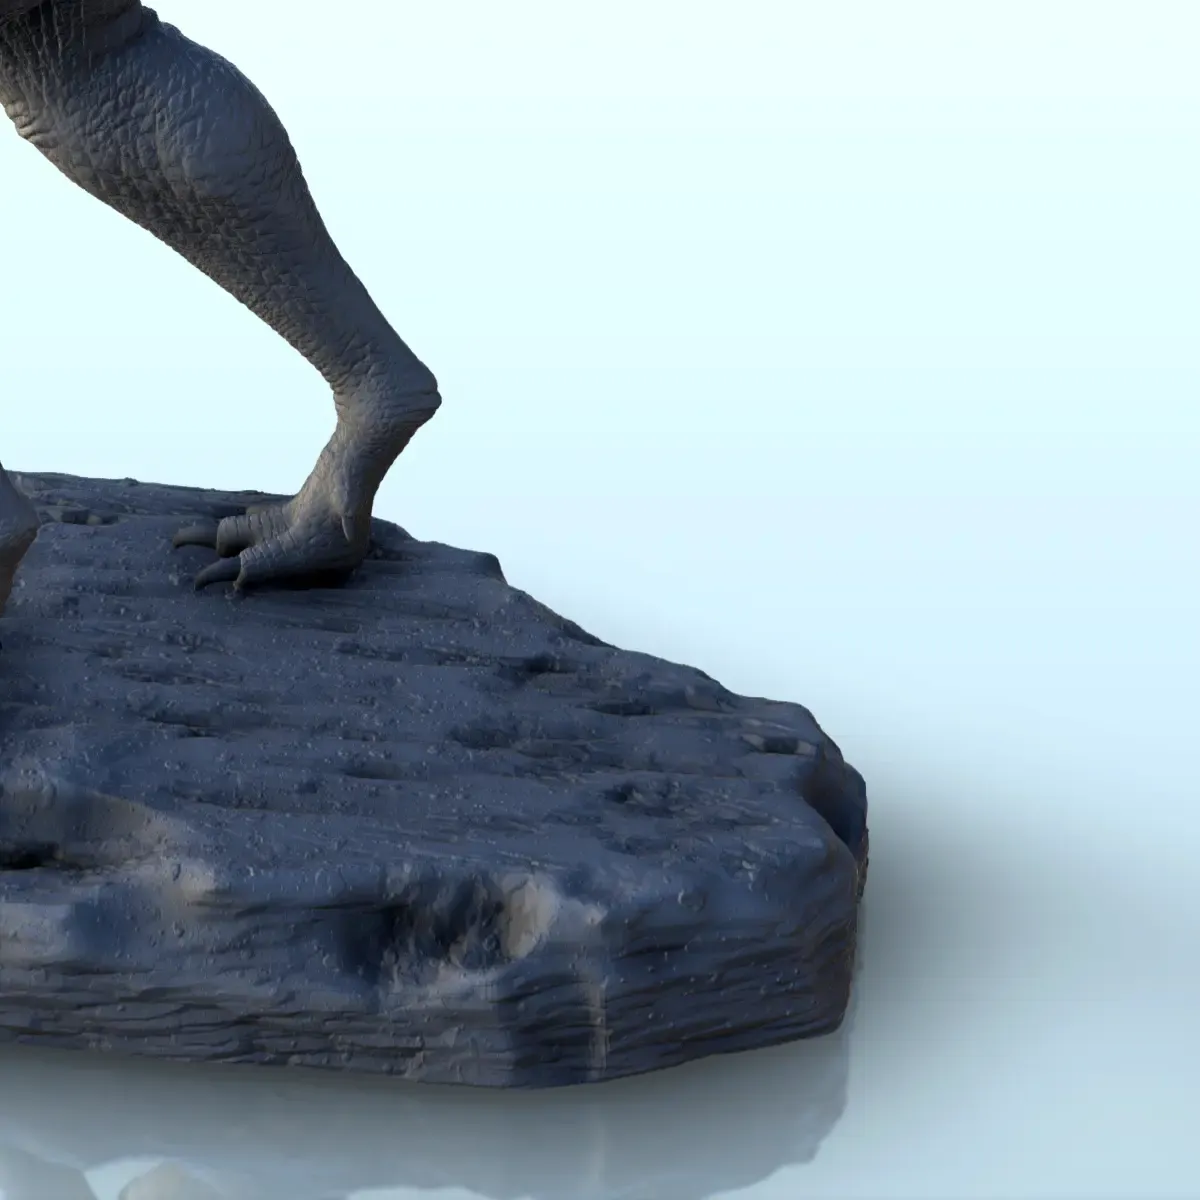 Dilophosaurus dinosaur (4) - miniatures figure statue scener